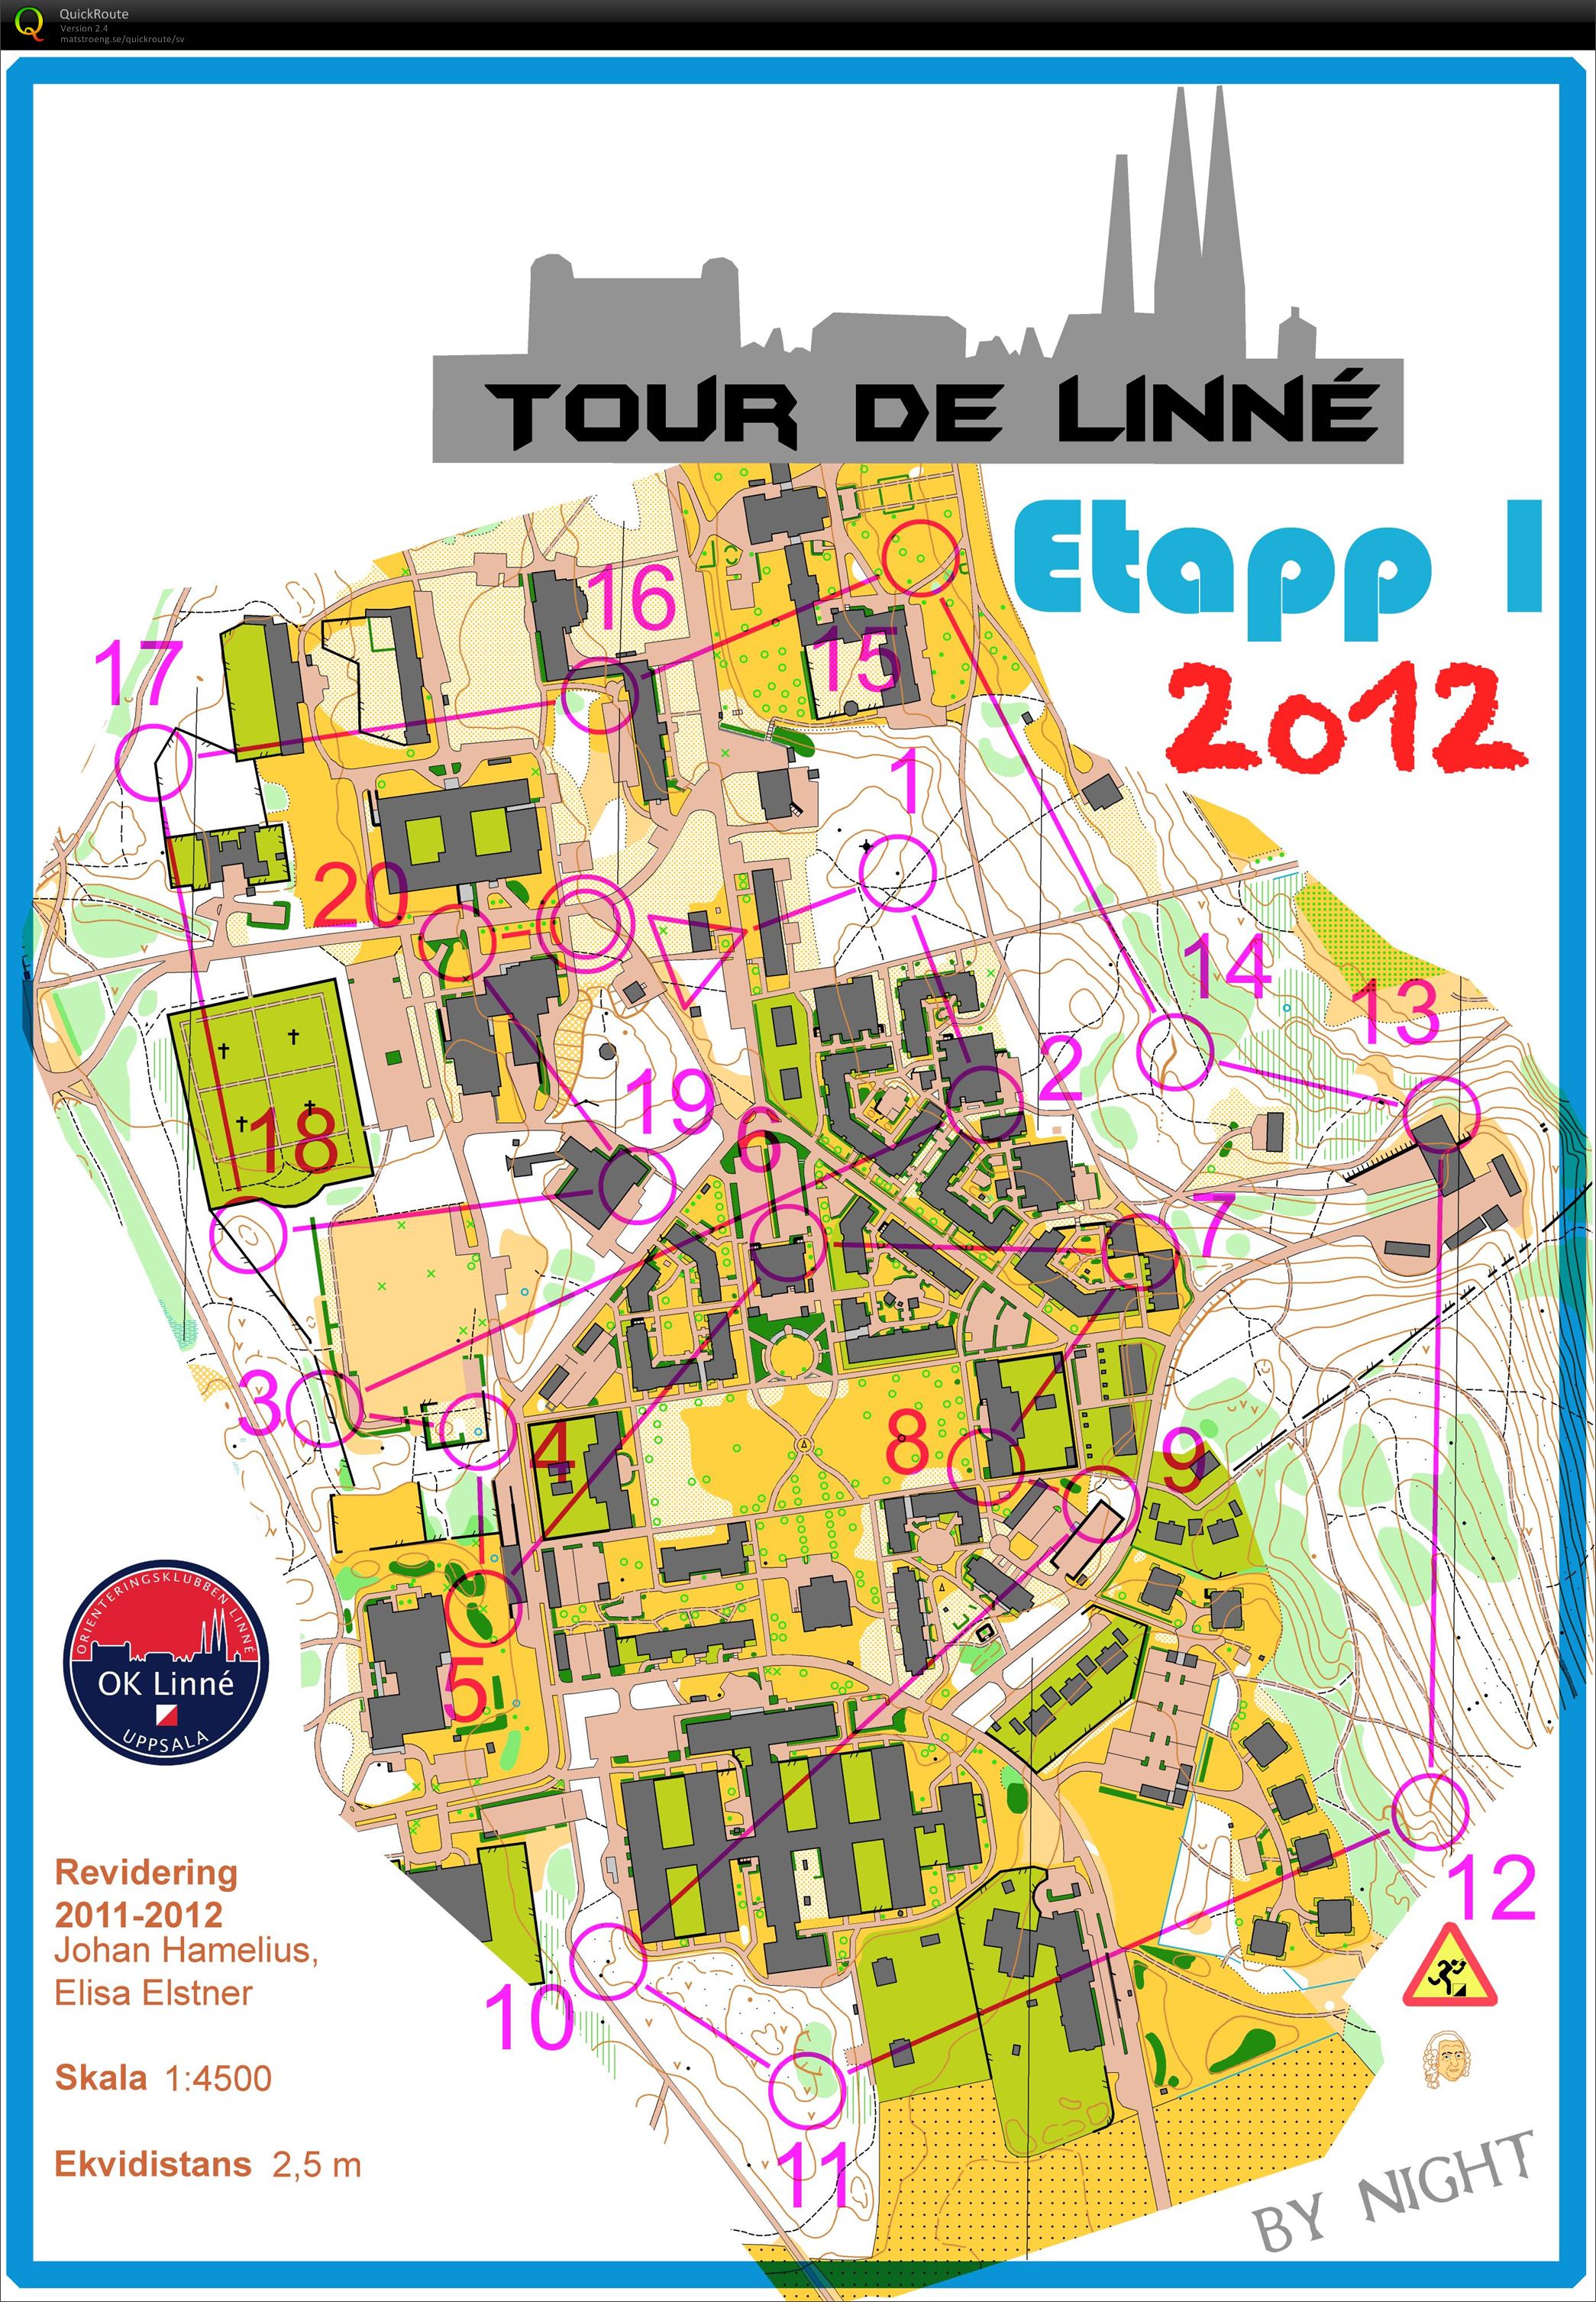 Tour de Linne - etapp 1 (2012-02-13)